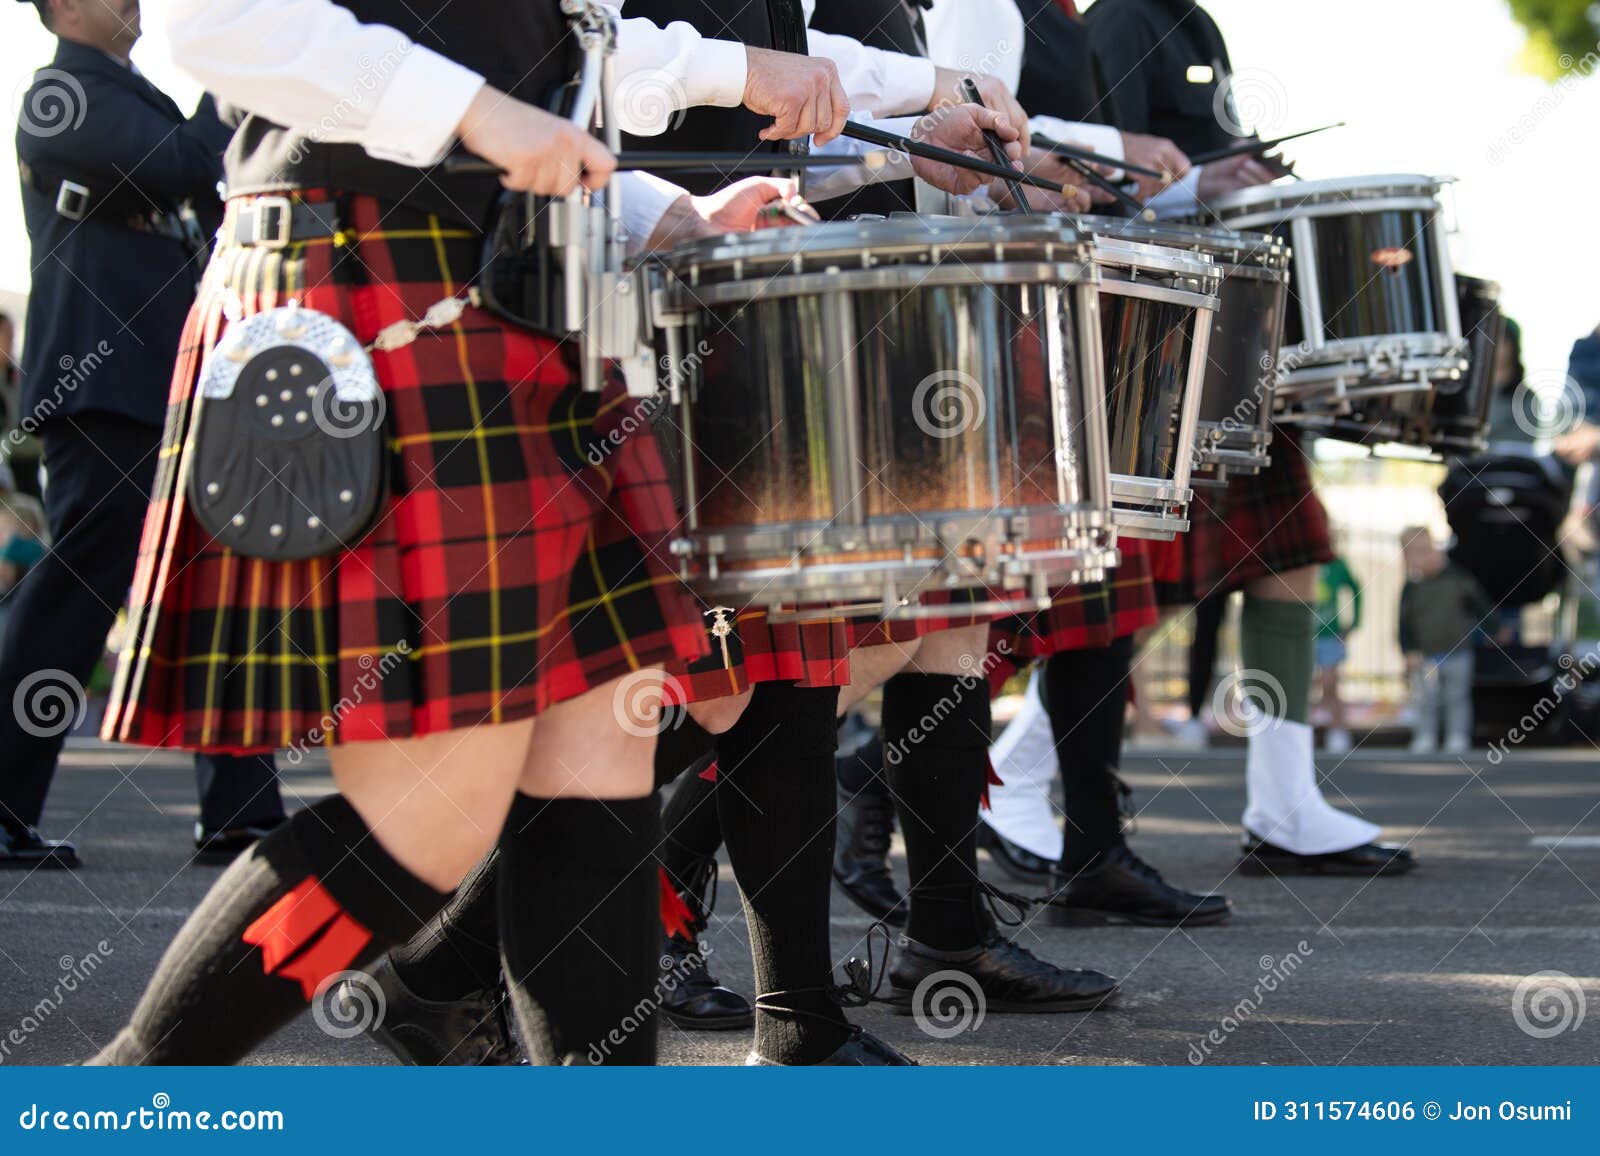 traditional community parade honors the irish